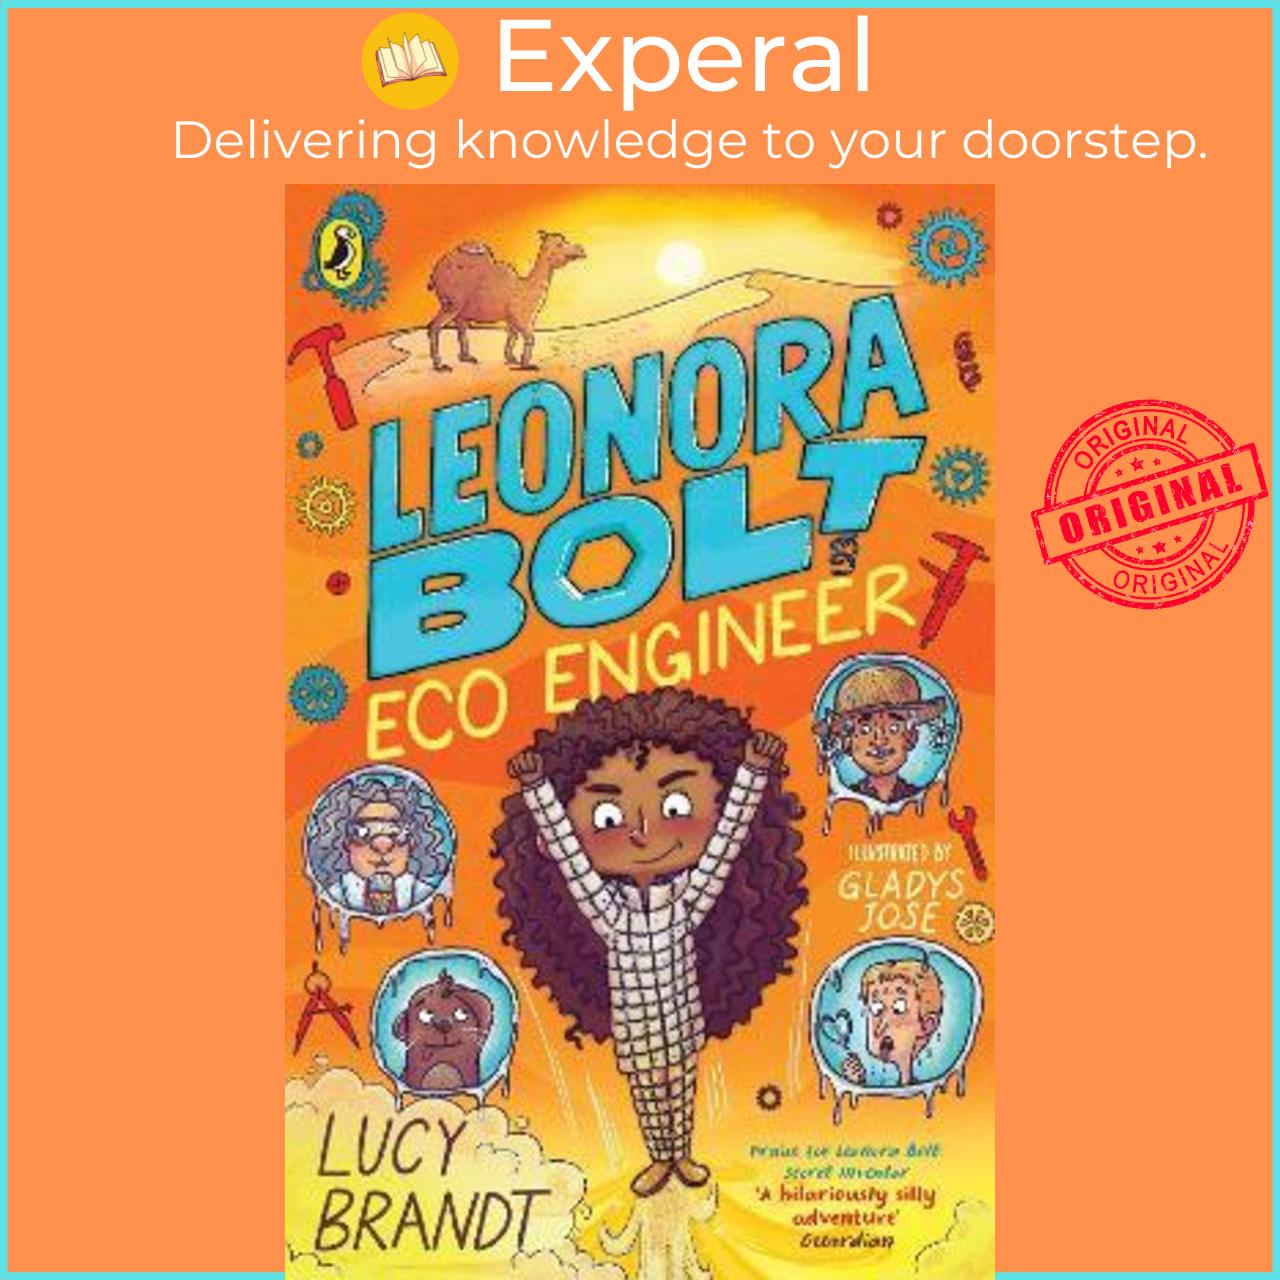 Hình ảnh Sách - Leonora Bolt: Eco Engineer by Lucy Brandt (UK edition, paperback)